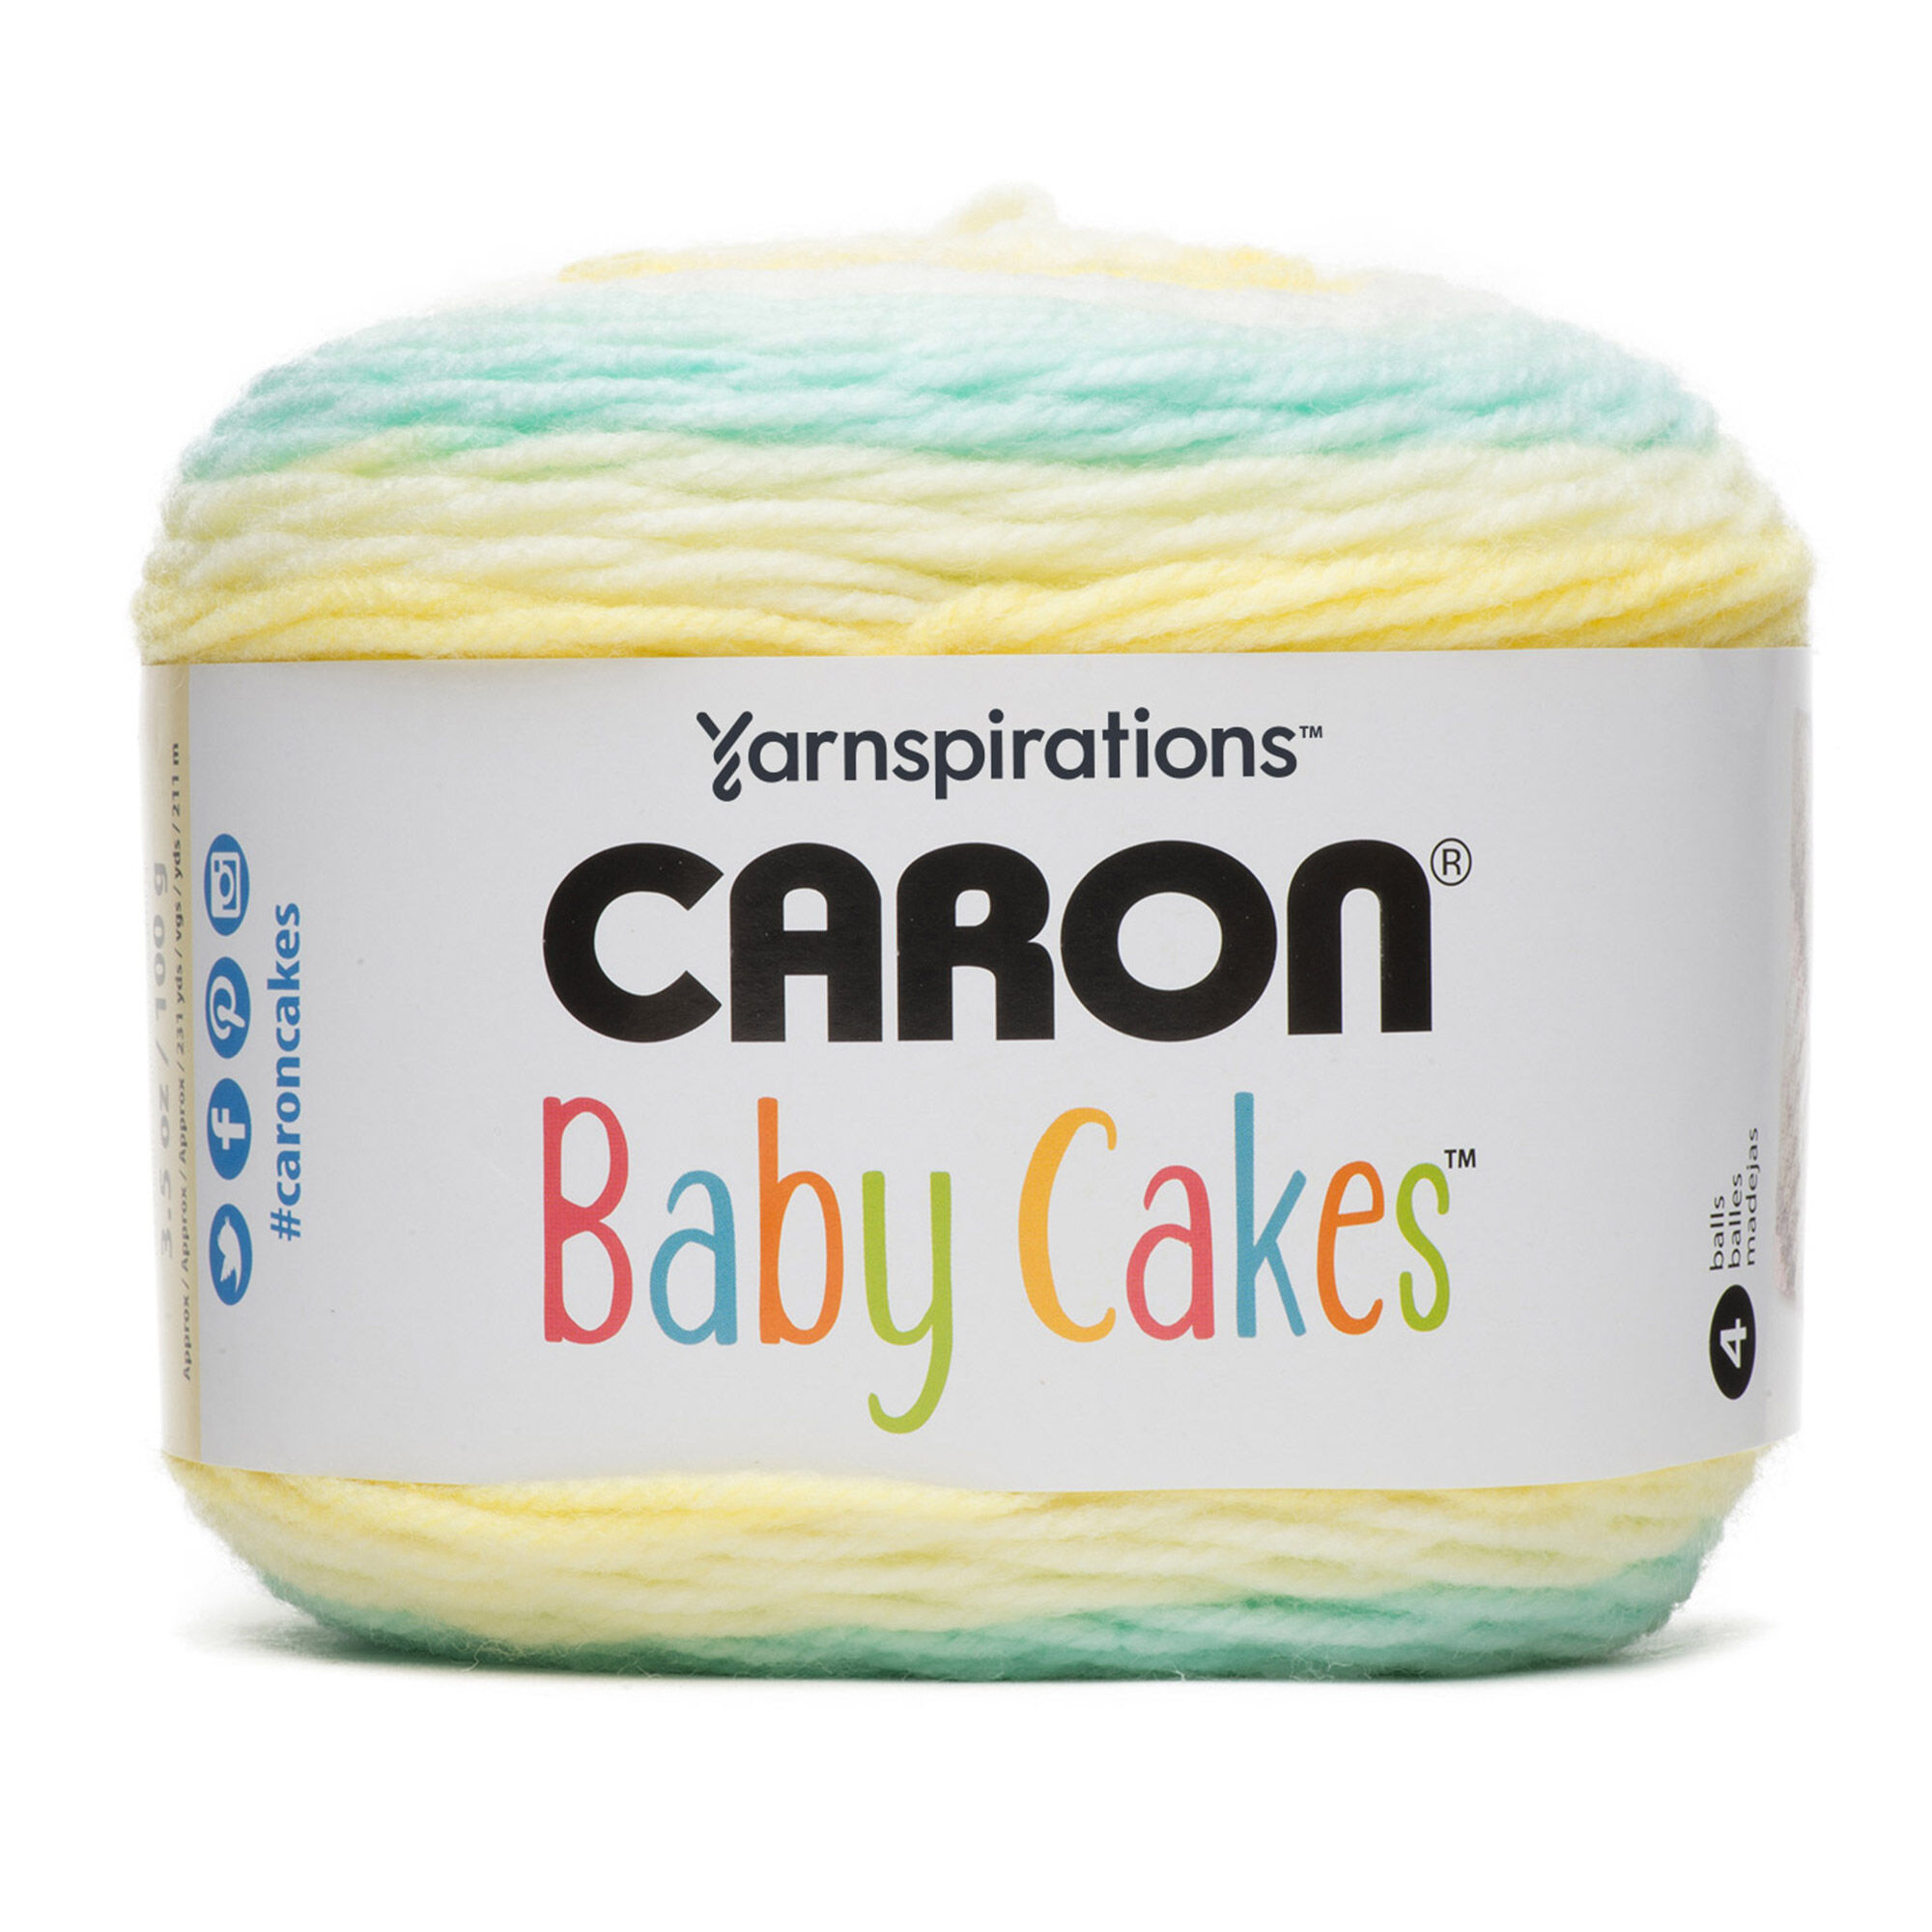 Caron Big Cakes Yarn 300g